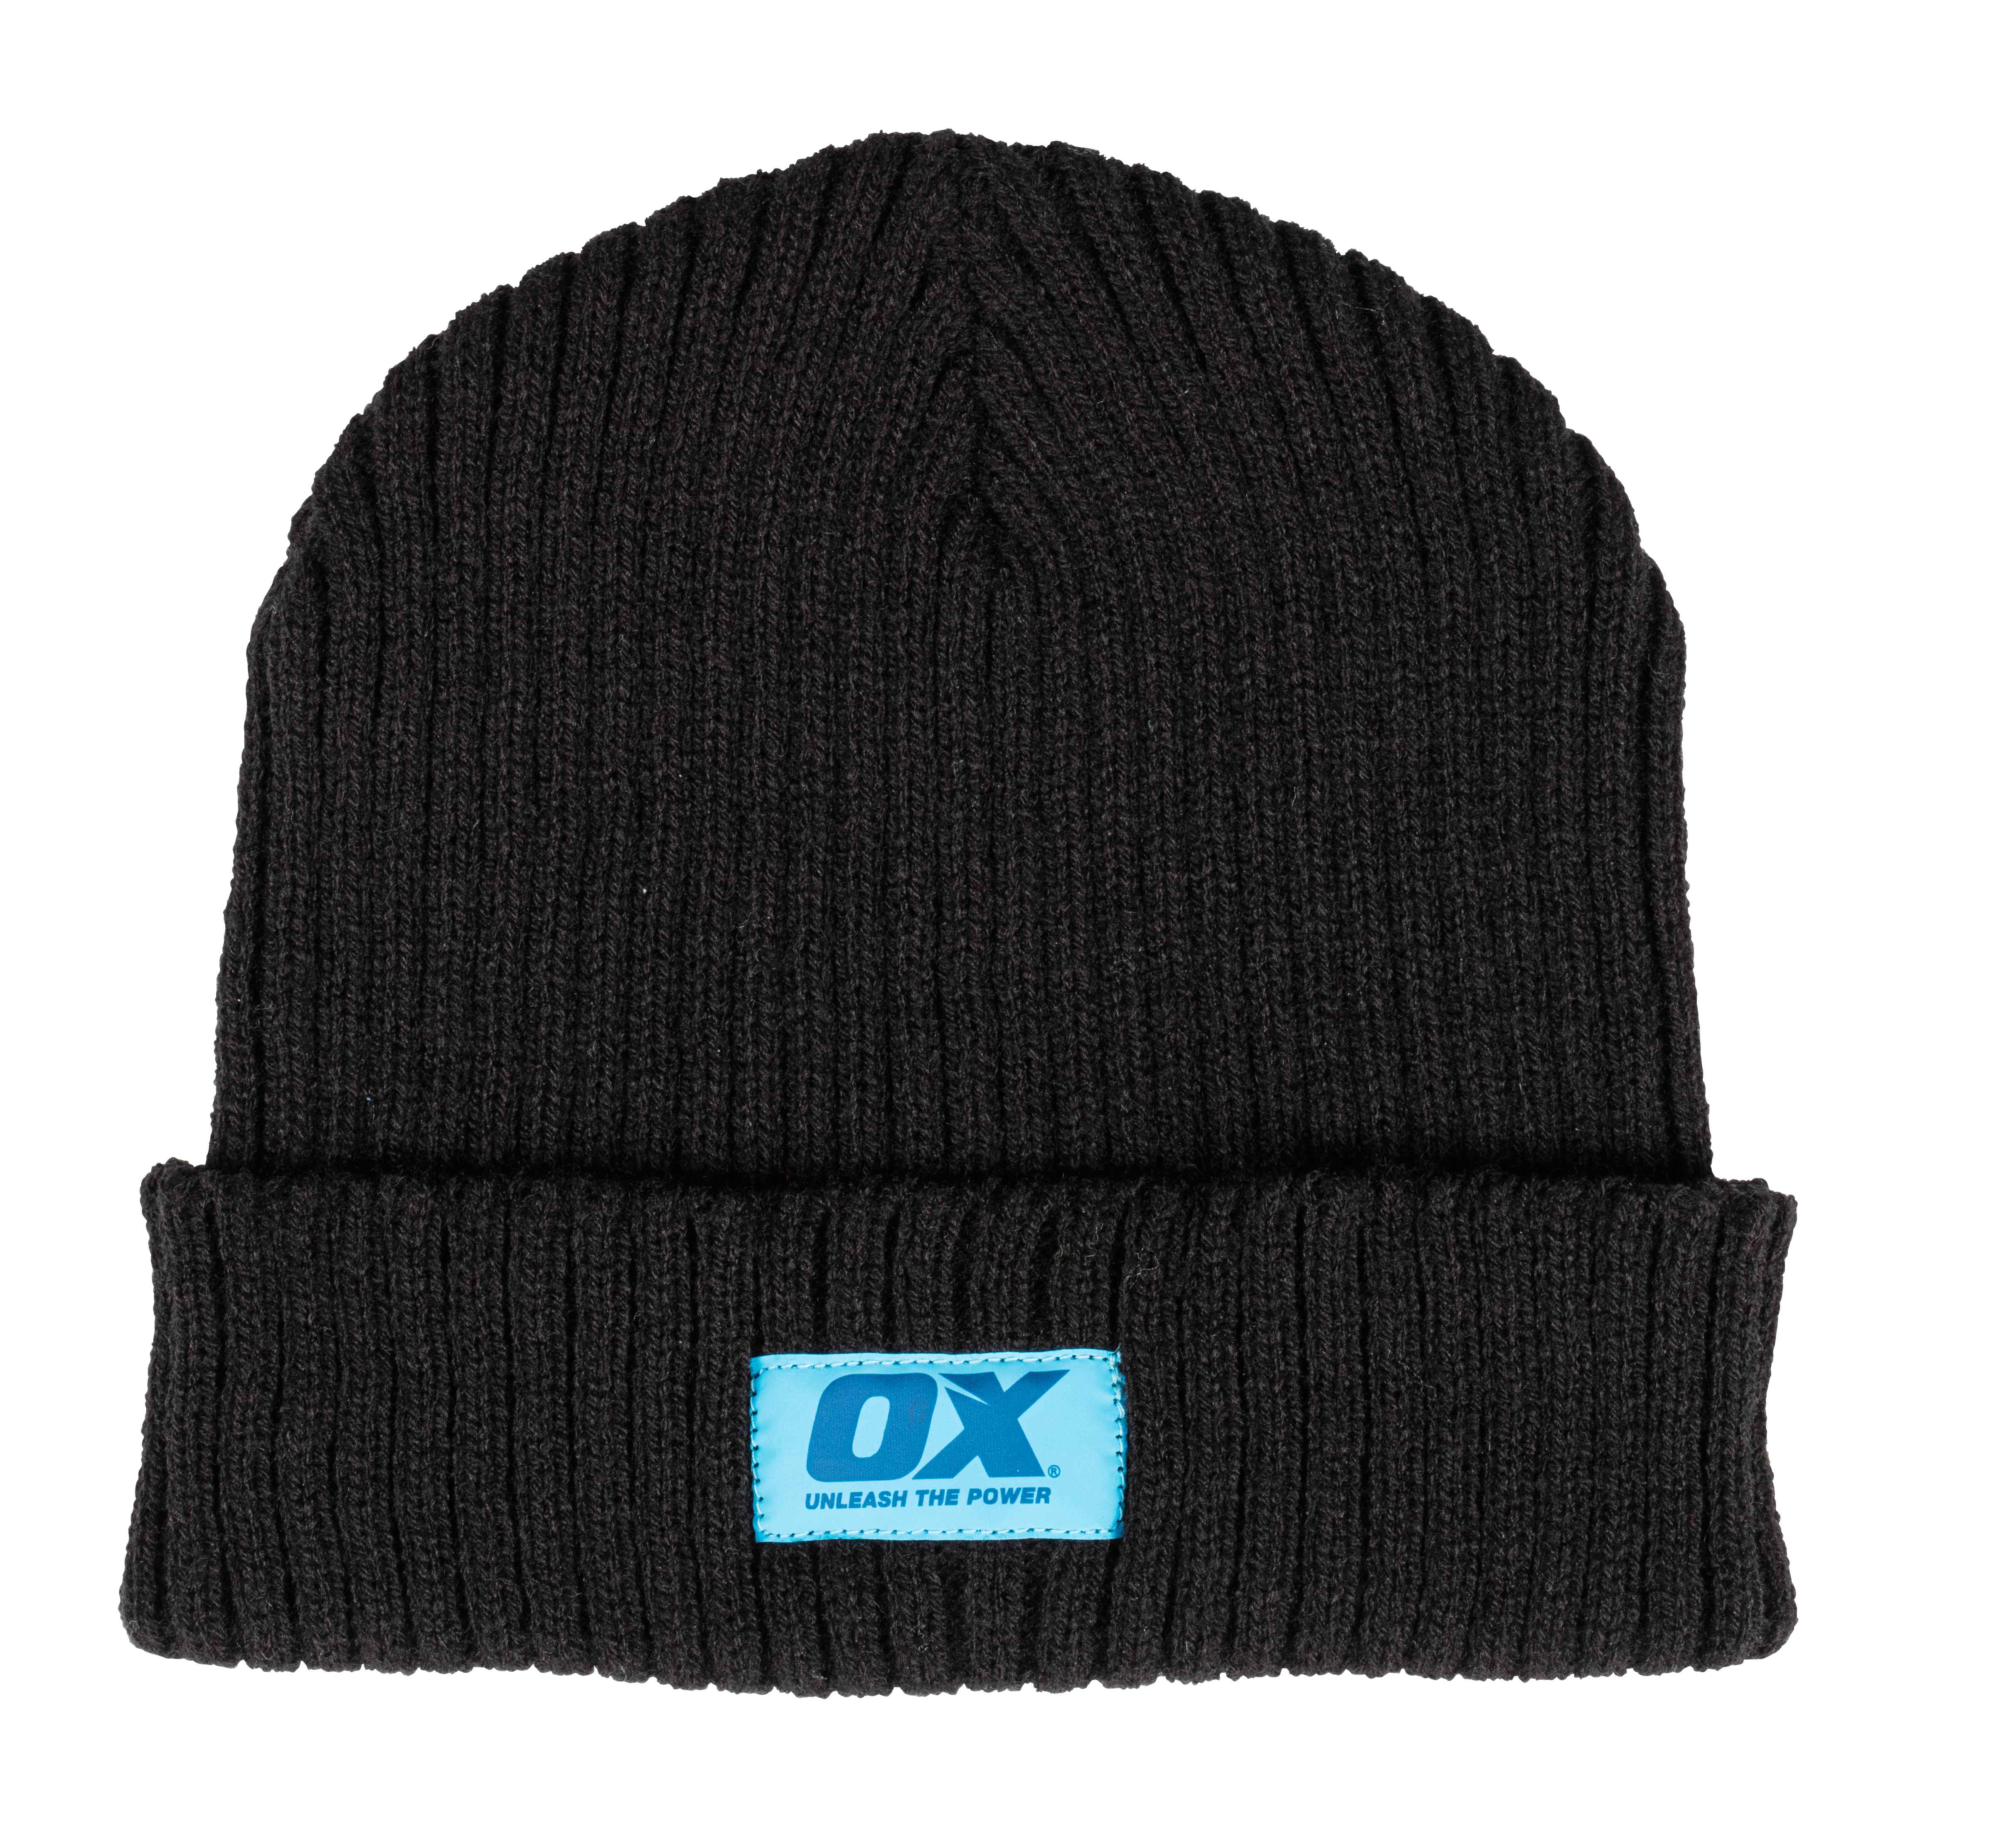 OX Winter Knitted Beanie - Black